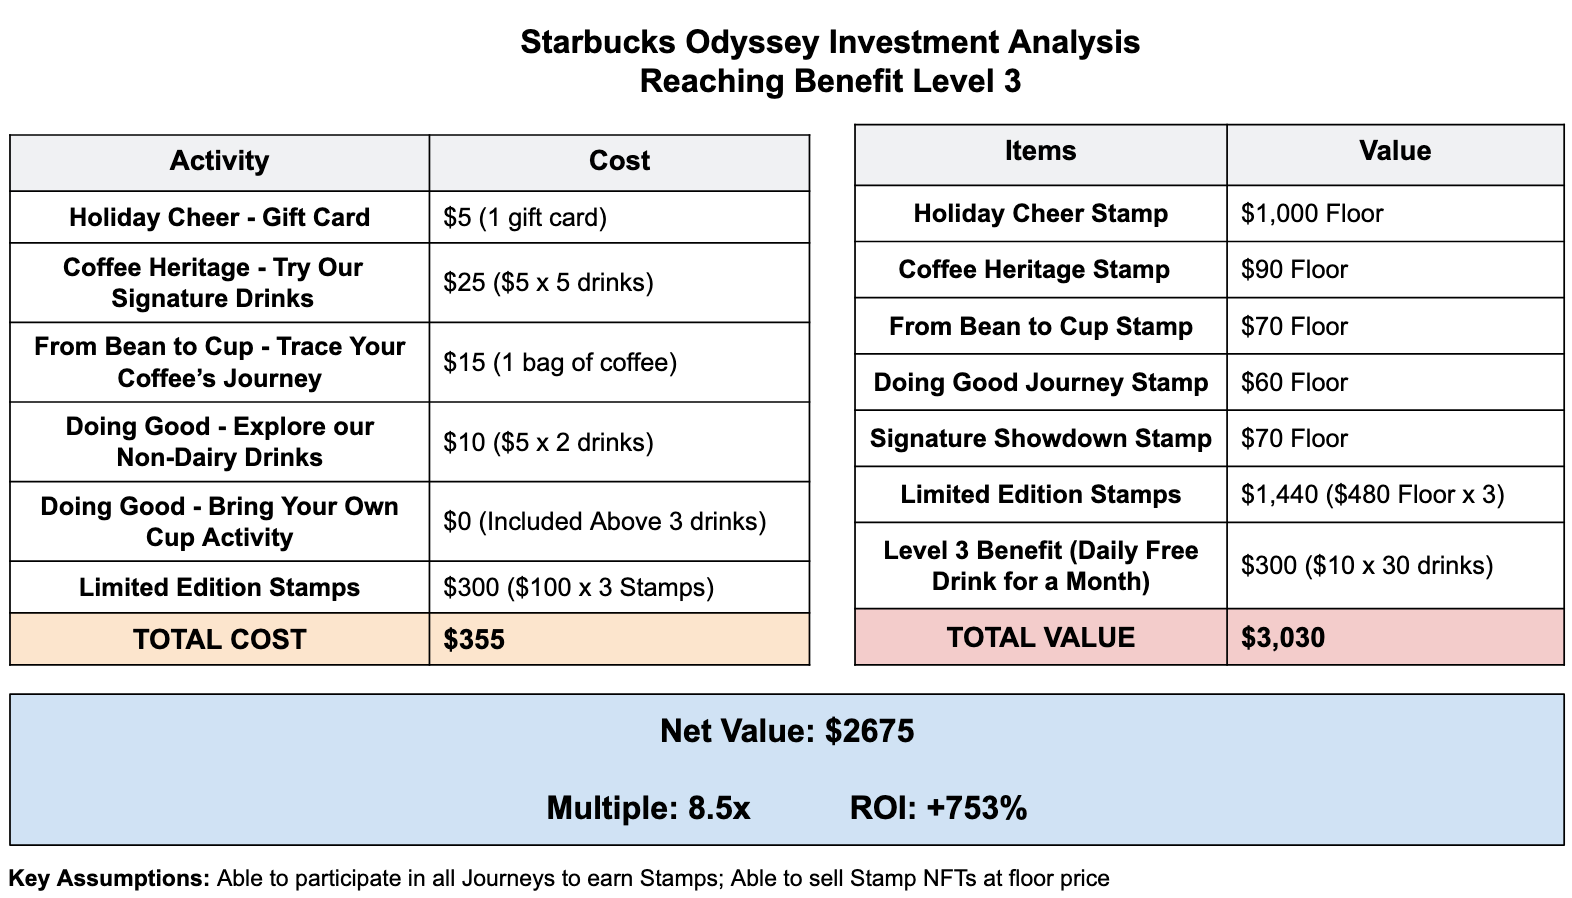 Starbucks Odyssey Investment Analysis Reaching Benefit Level 3